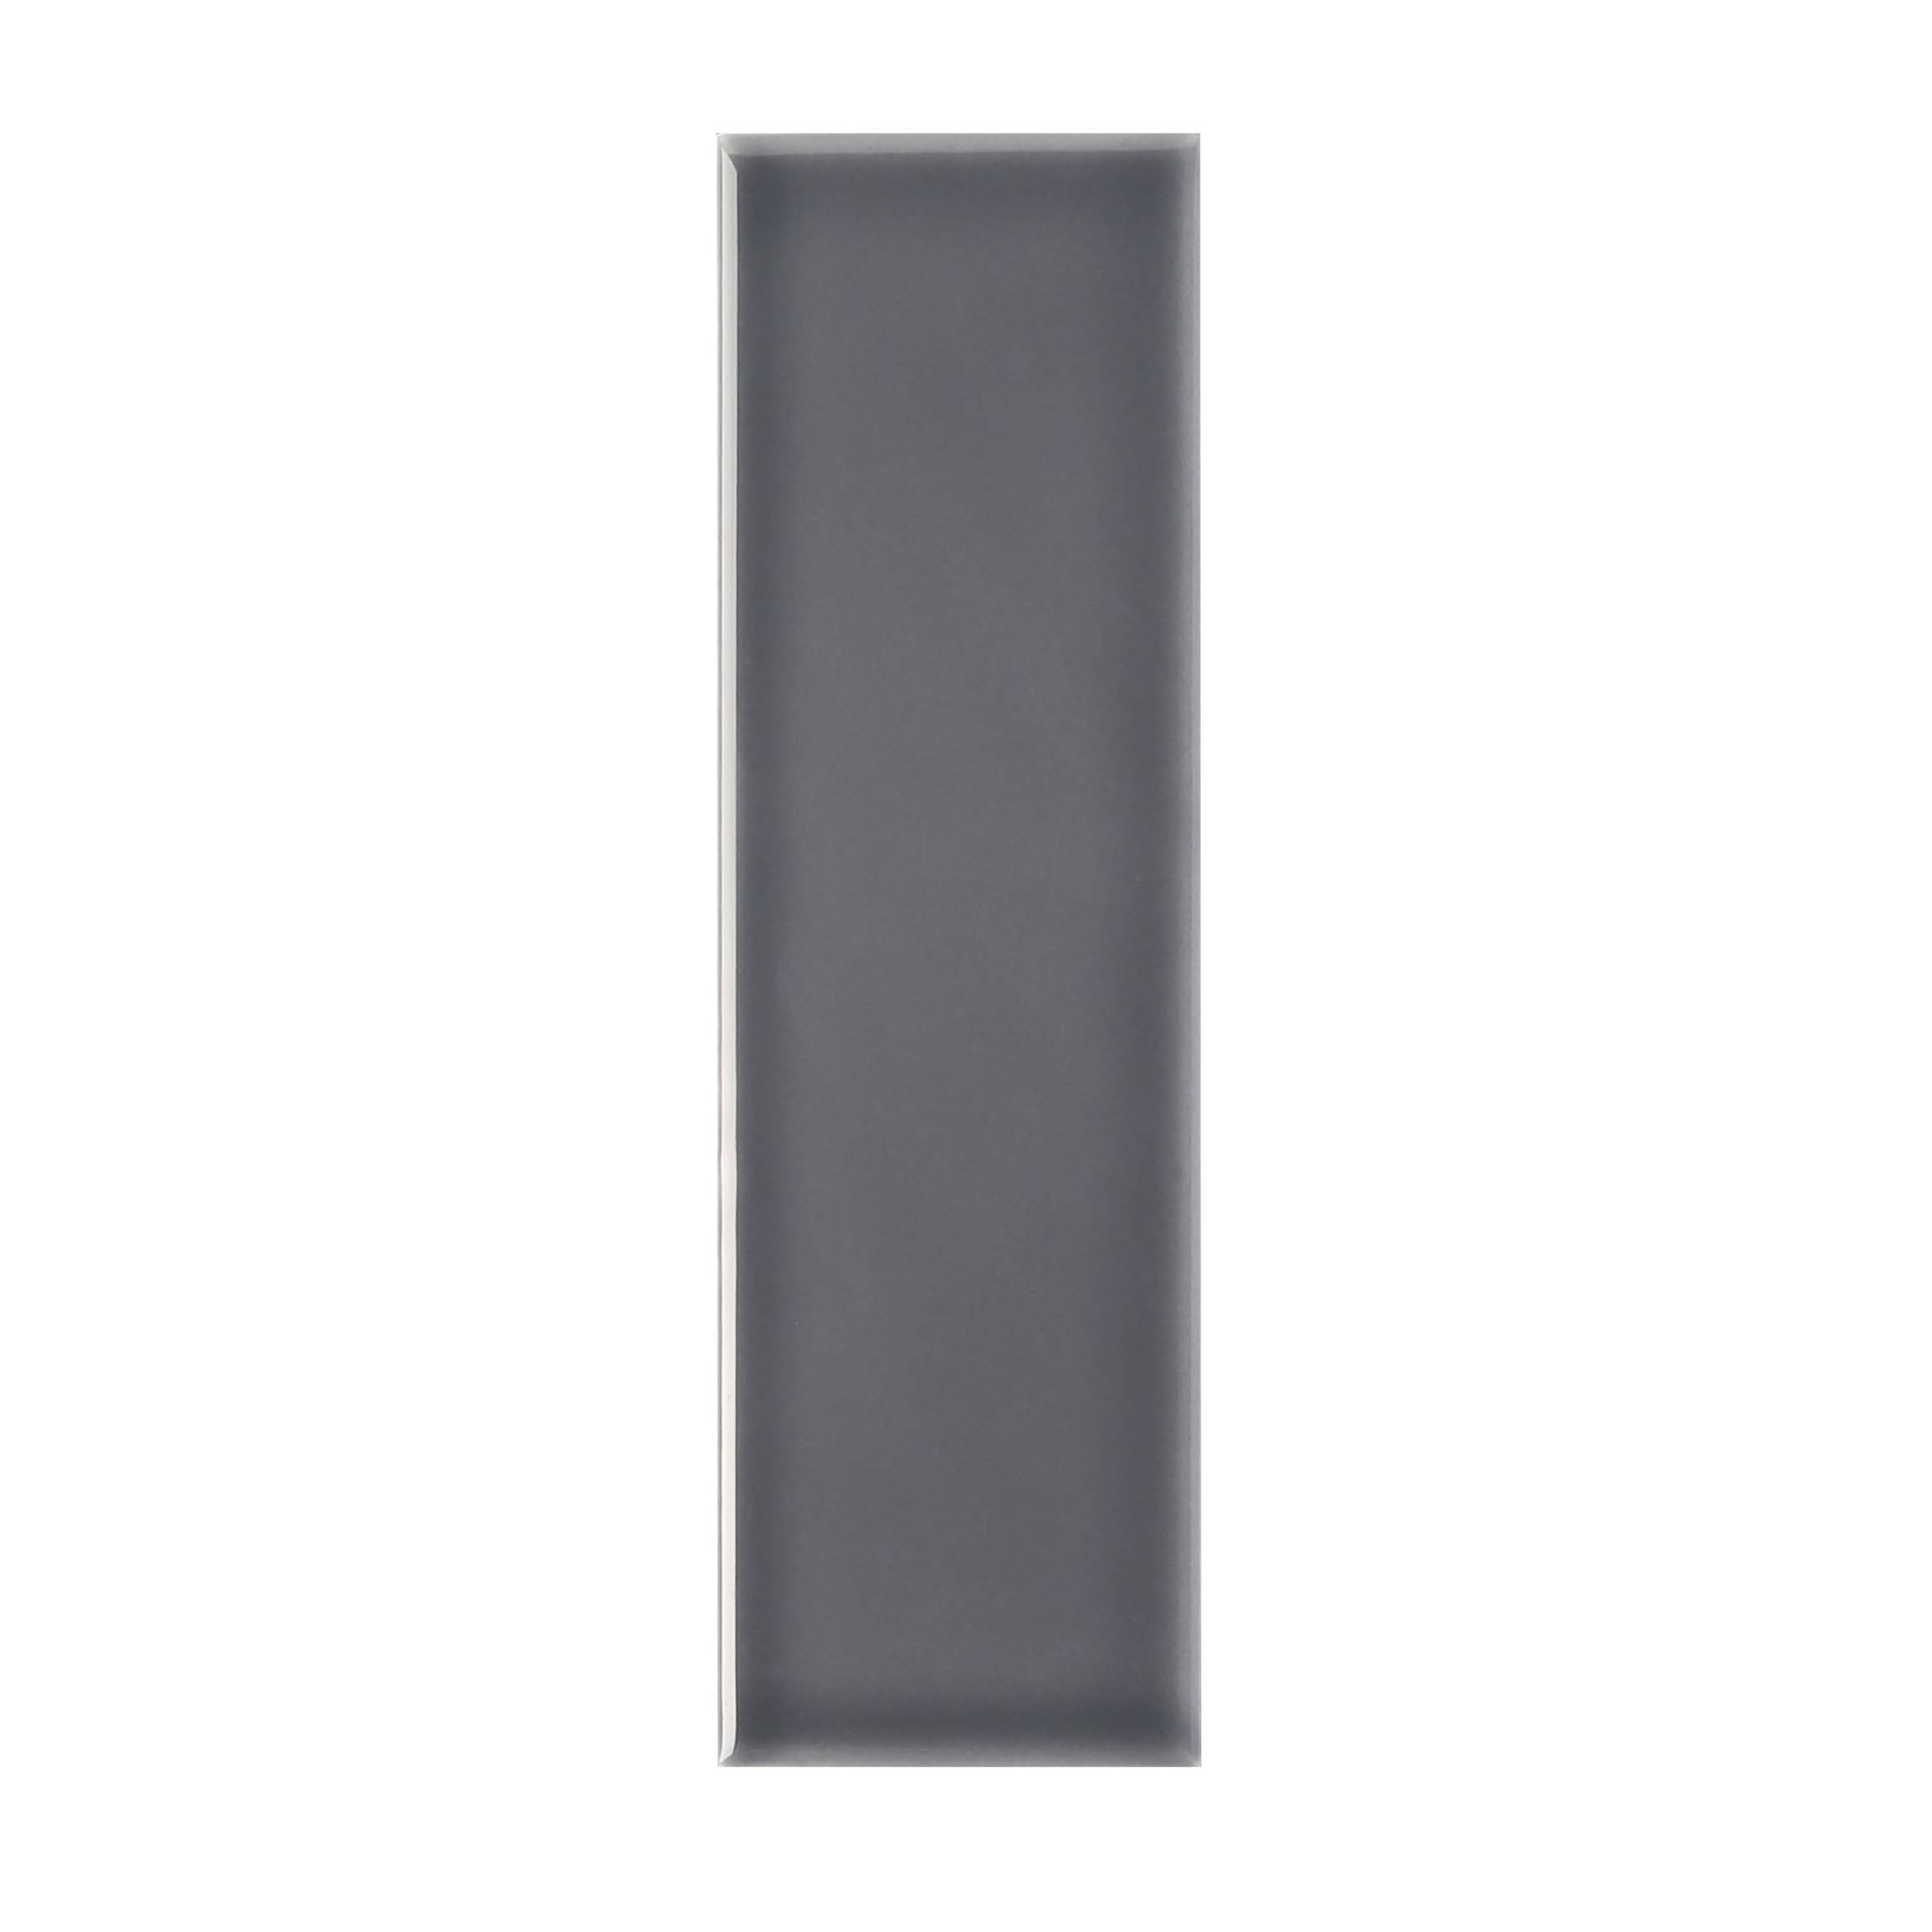 Mayfair Dark grey Gloss Ceramic Indoor Wall tile Sample